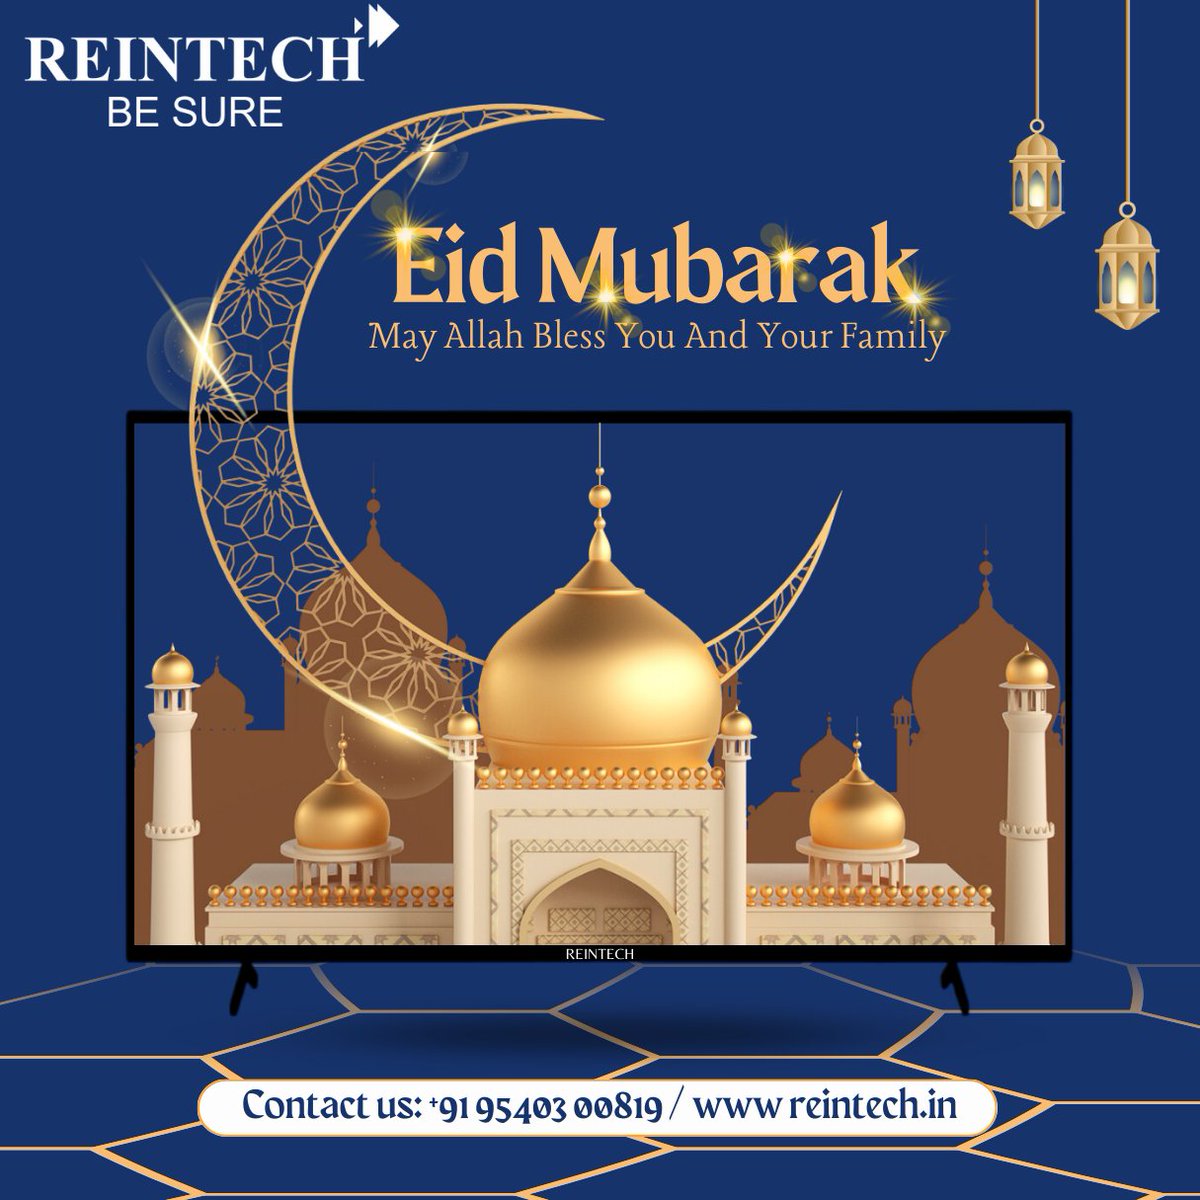 Eid Mubarak from Reintech Electronics Pvt Ltd. May Allah bless you and your family!🌙✨ #EidMubarak #HappyEid #Ledtv #Manufacturing #Festival #Reintech #Besure #Eidmubarak #Eid2024 #EidAlFitr2024